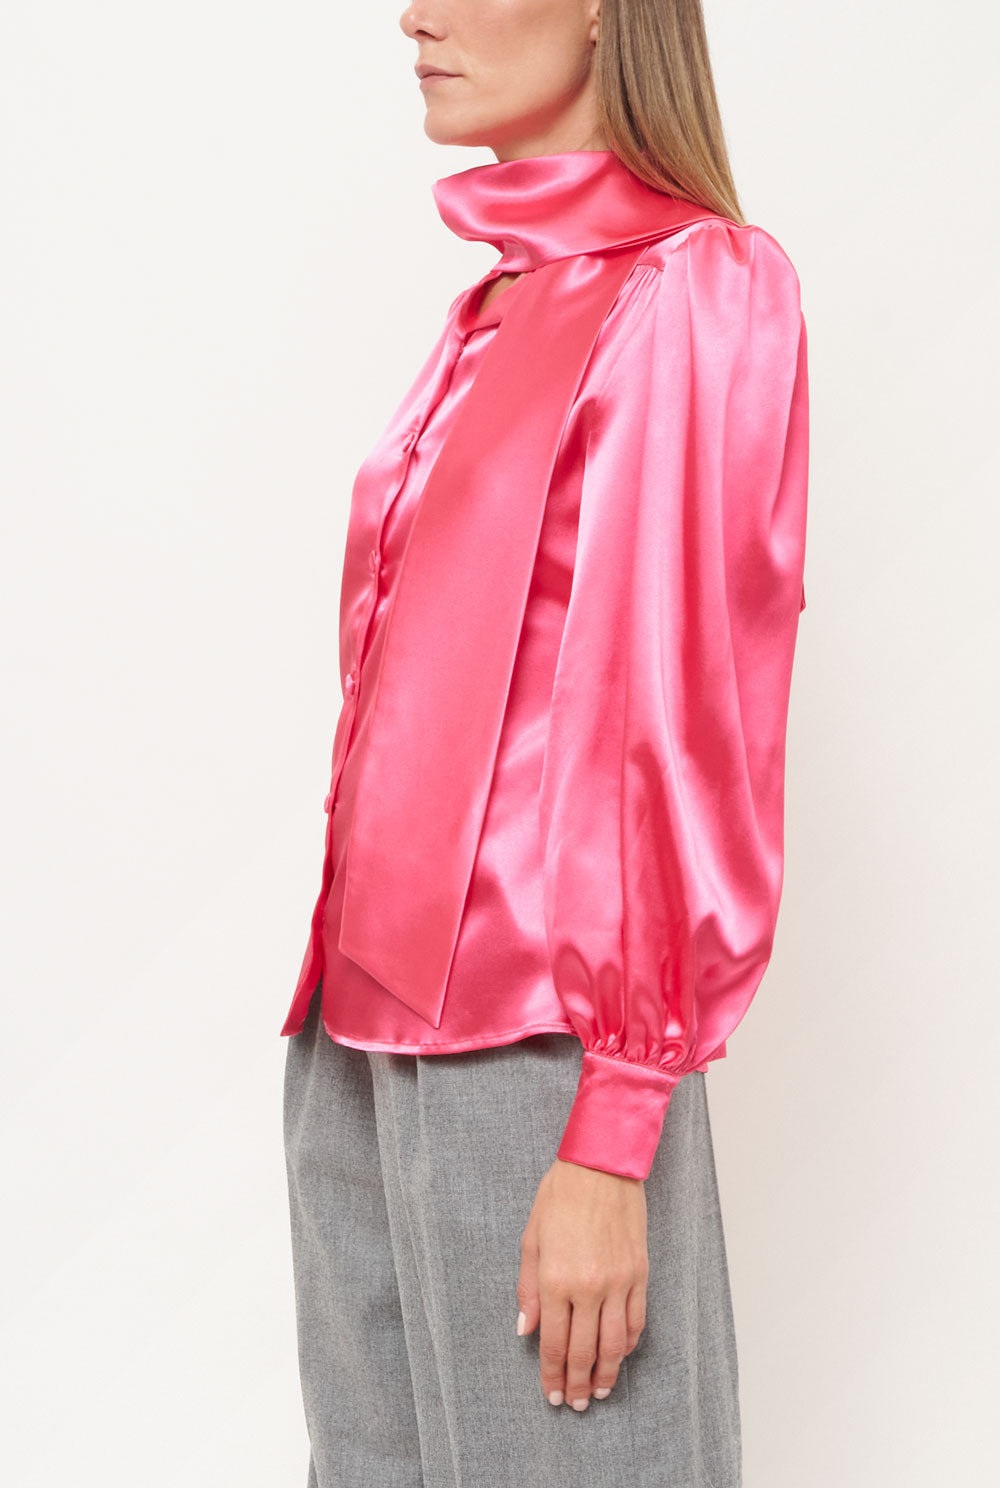 Lara pink shirt Shirts & blouses Leyre Doueil 